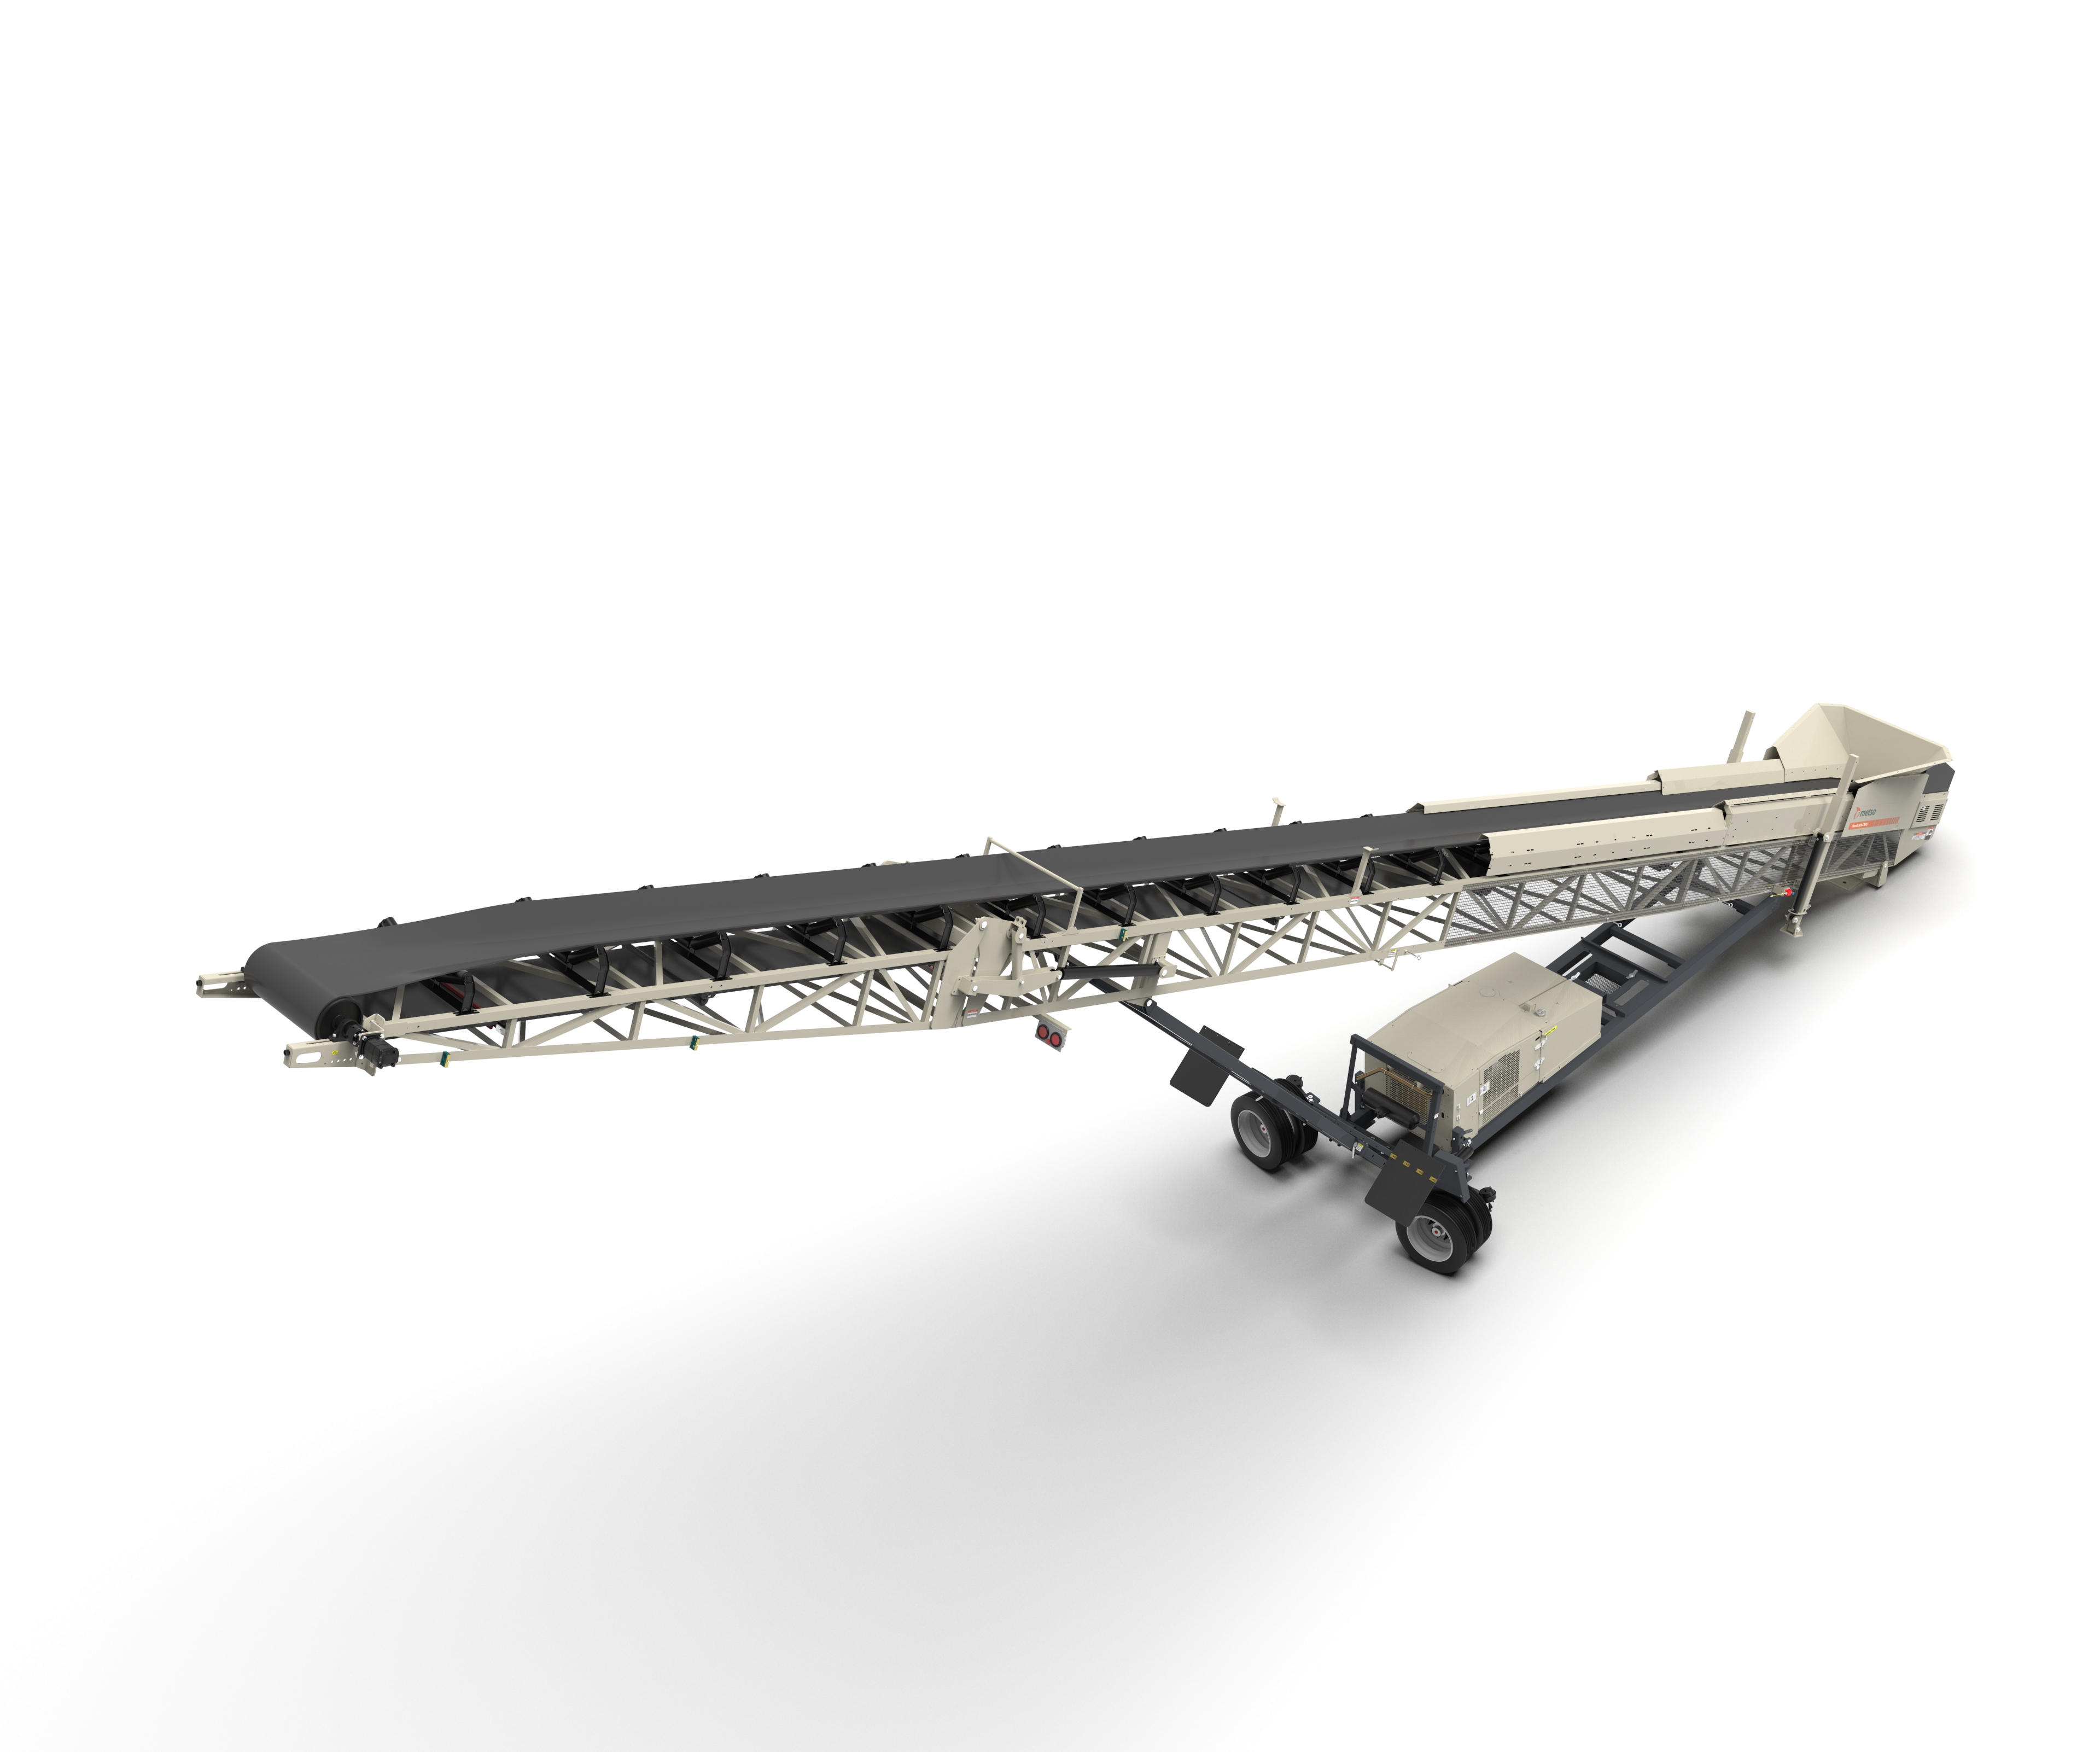 Nordtrack™ CW85 mobile conveyor 3D image.